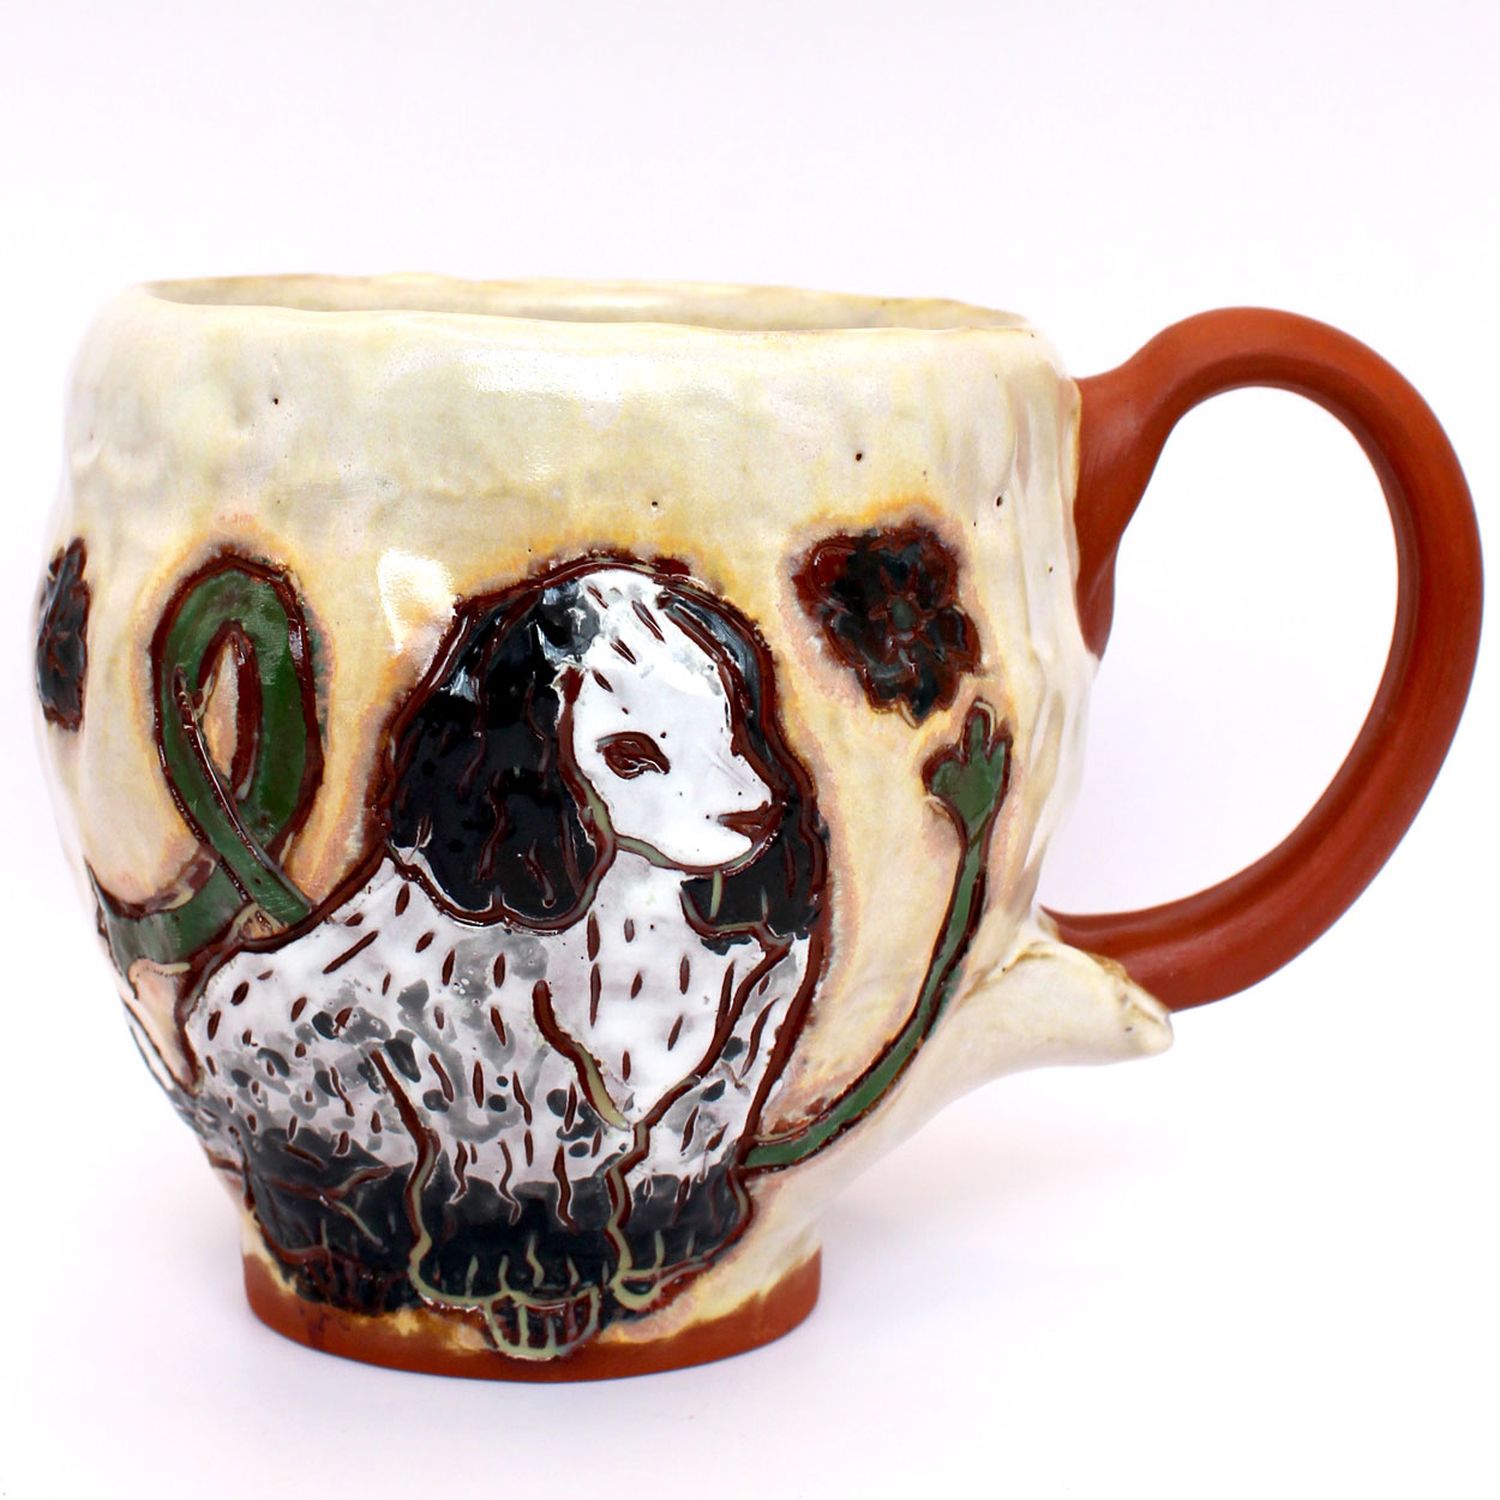 Zoe Pinnell: Black and White Dog Mug Product Image 3 of 3